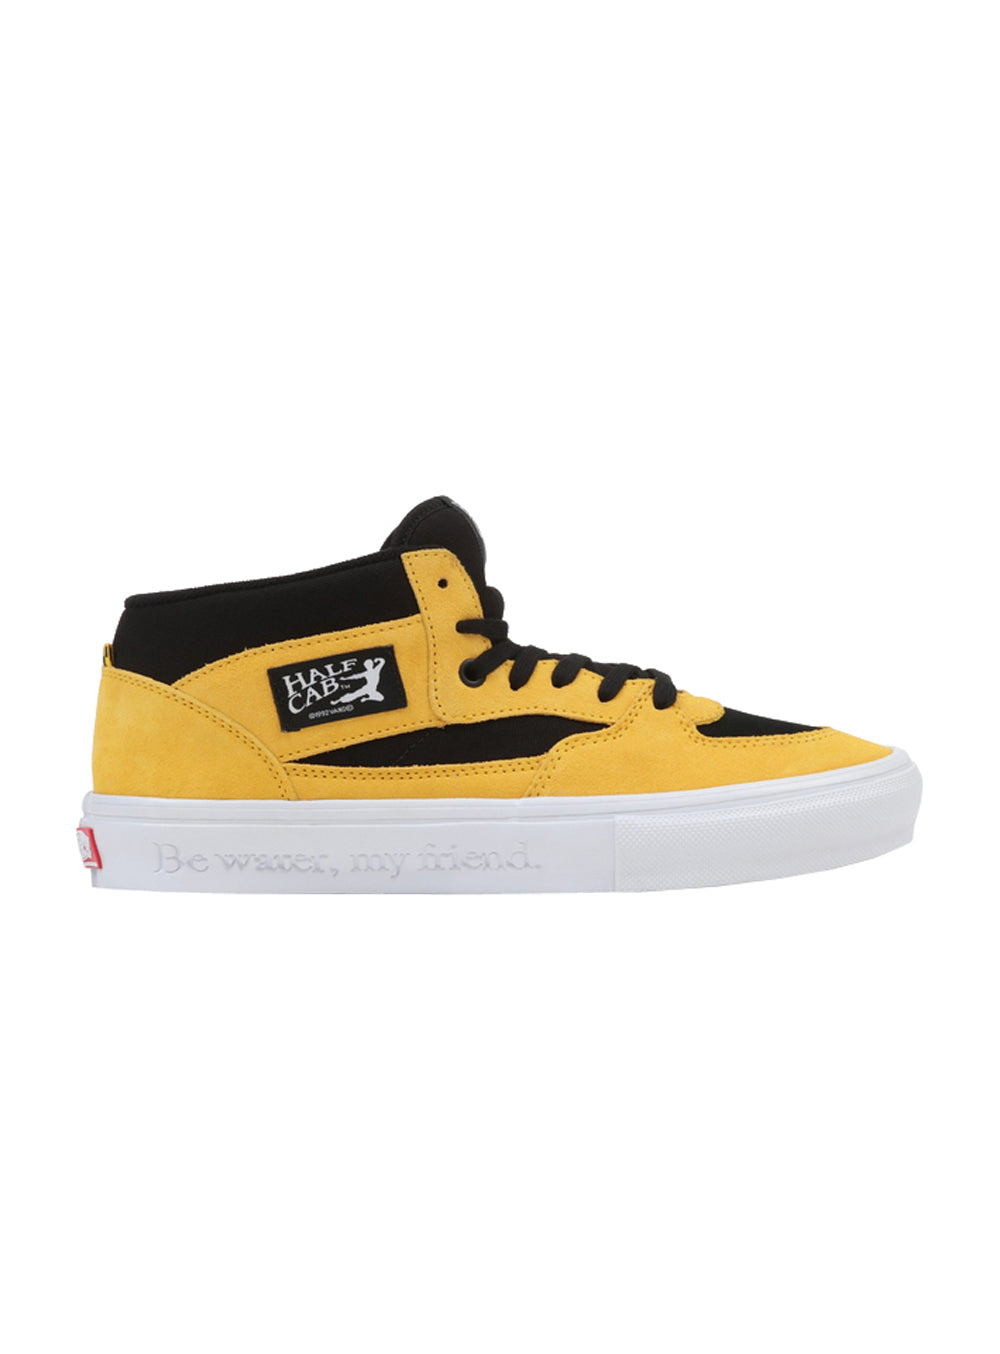 Vans Skate Half Cab Bruce Lee Black/Yellow 9.5